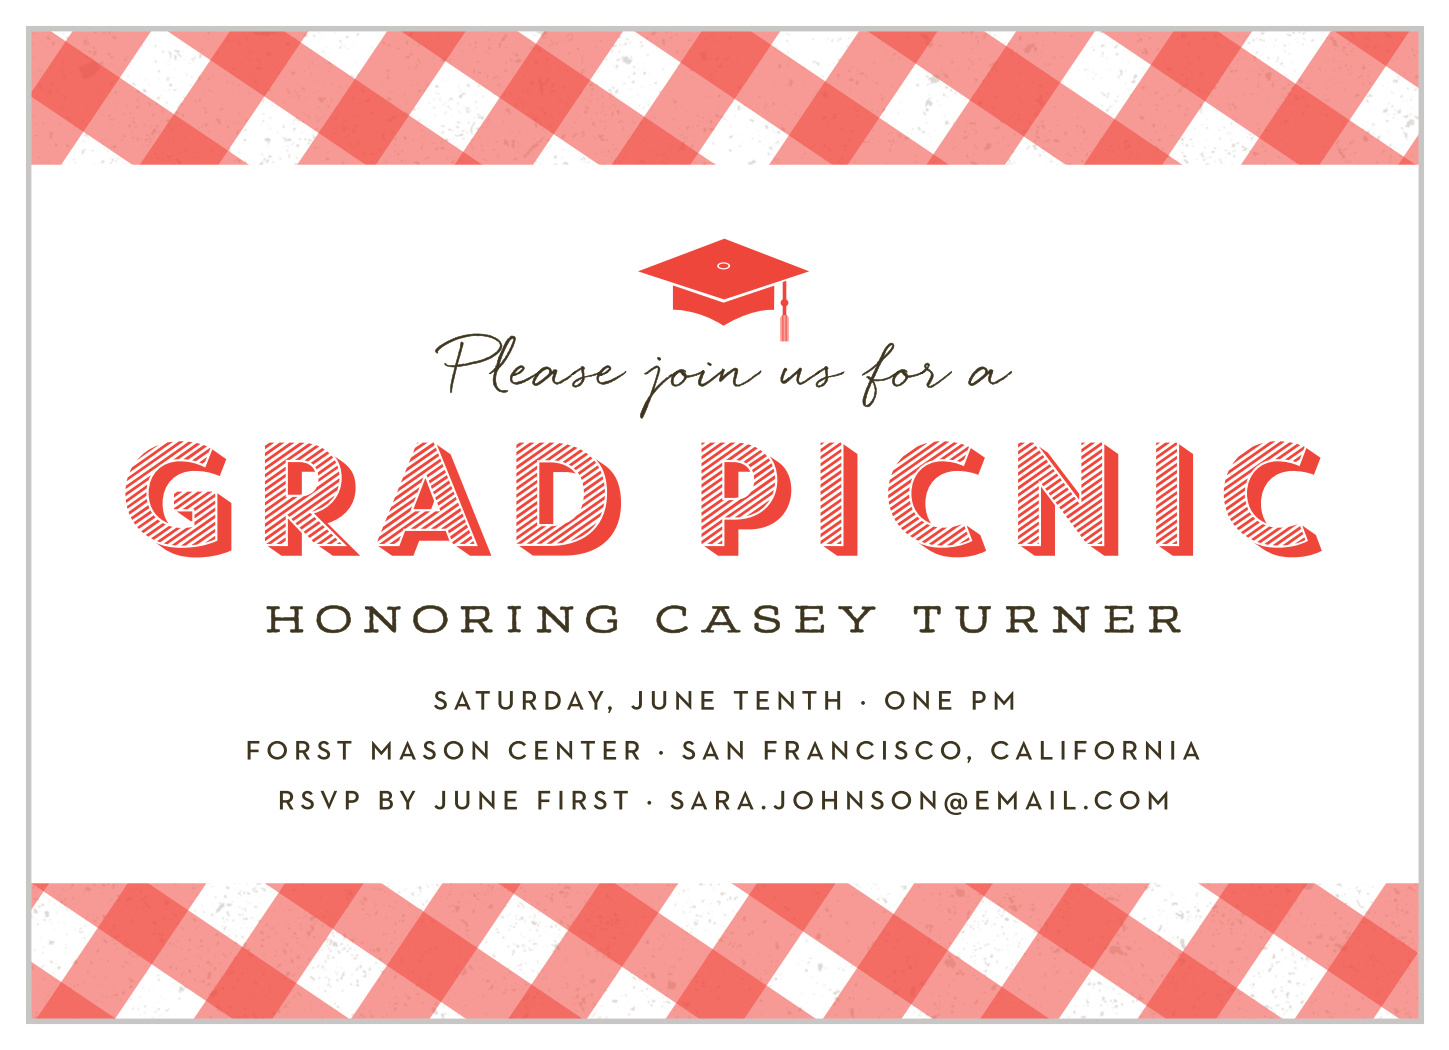 Picnic Plaid Graduation Invitations